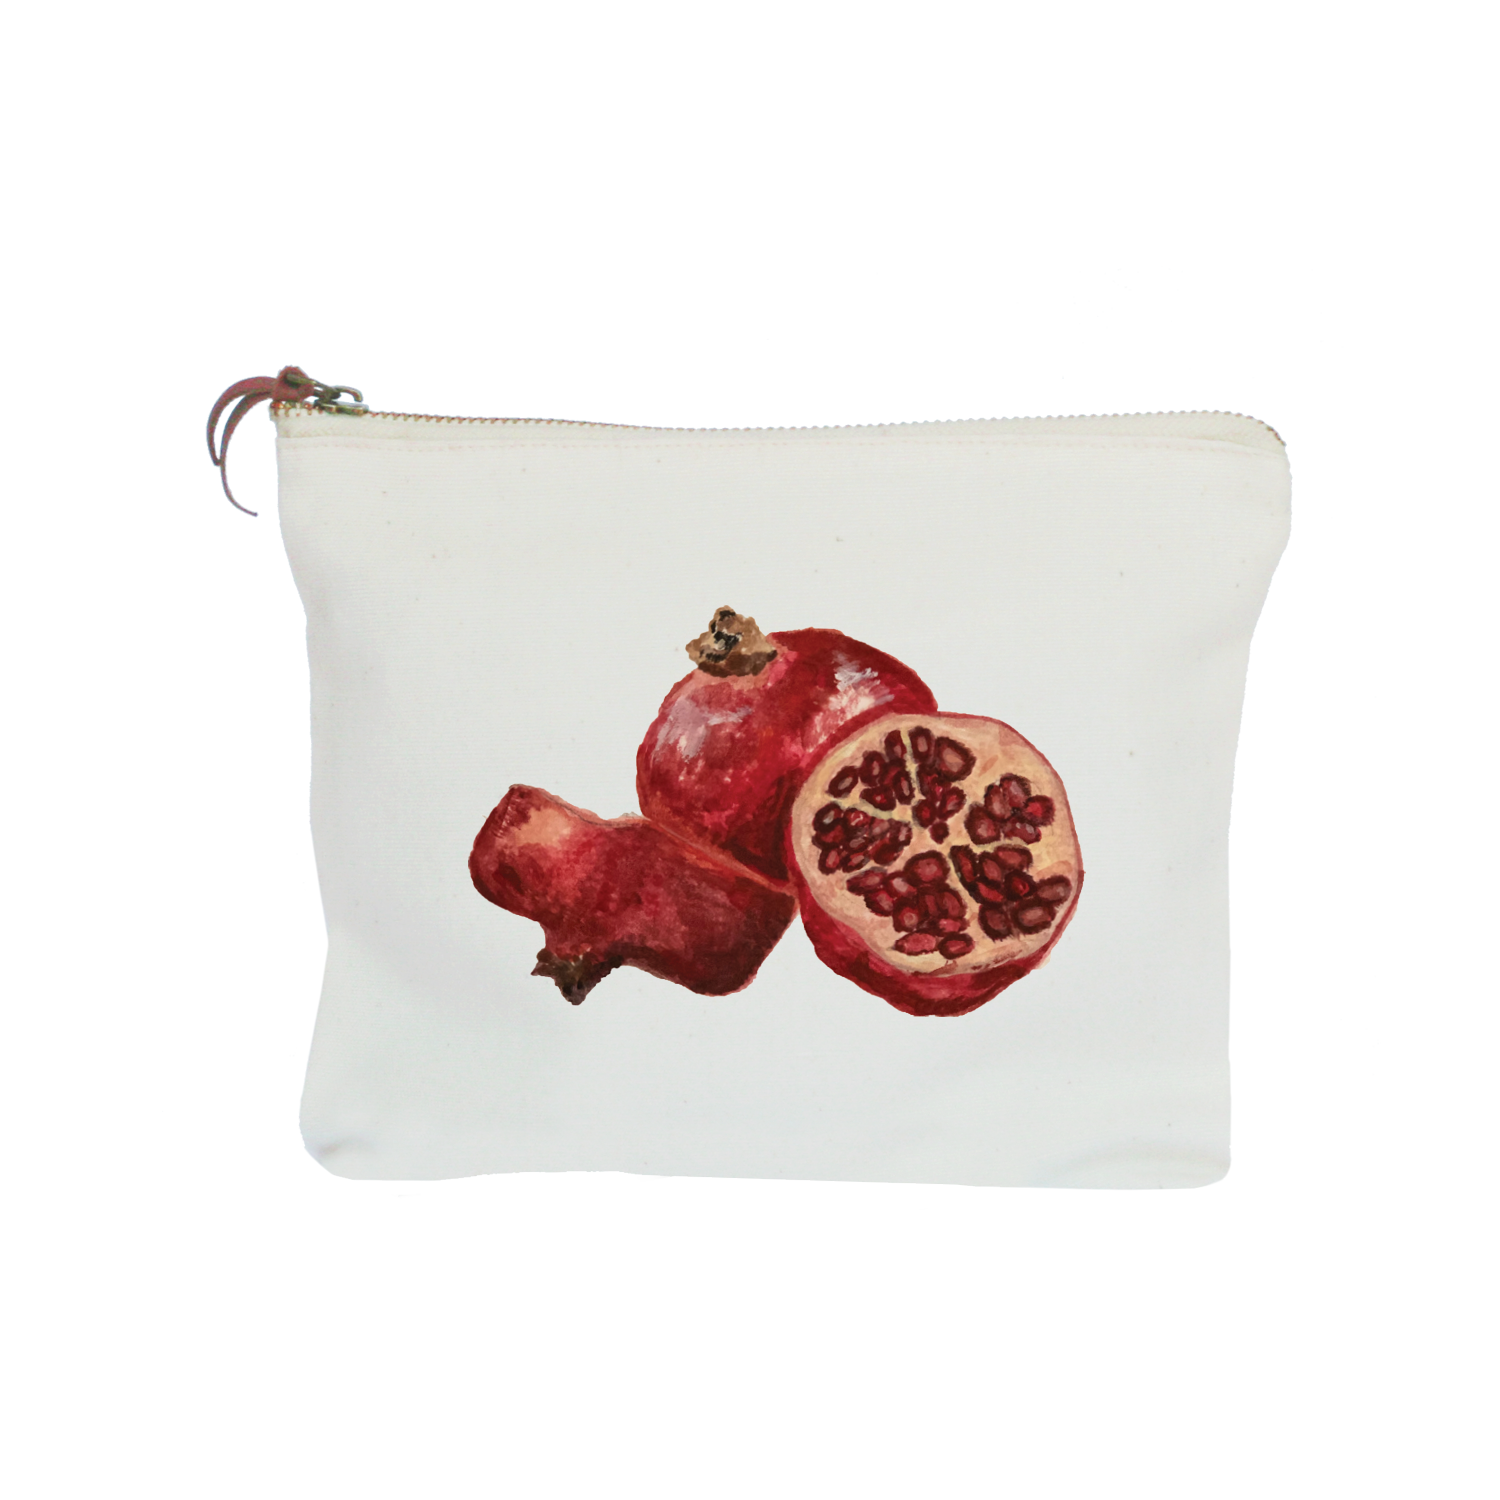 pomegranate zipper pouch